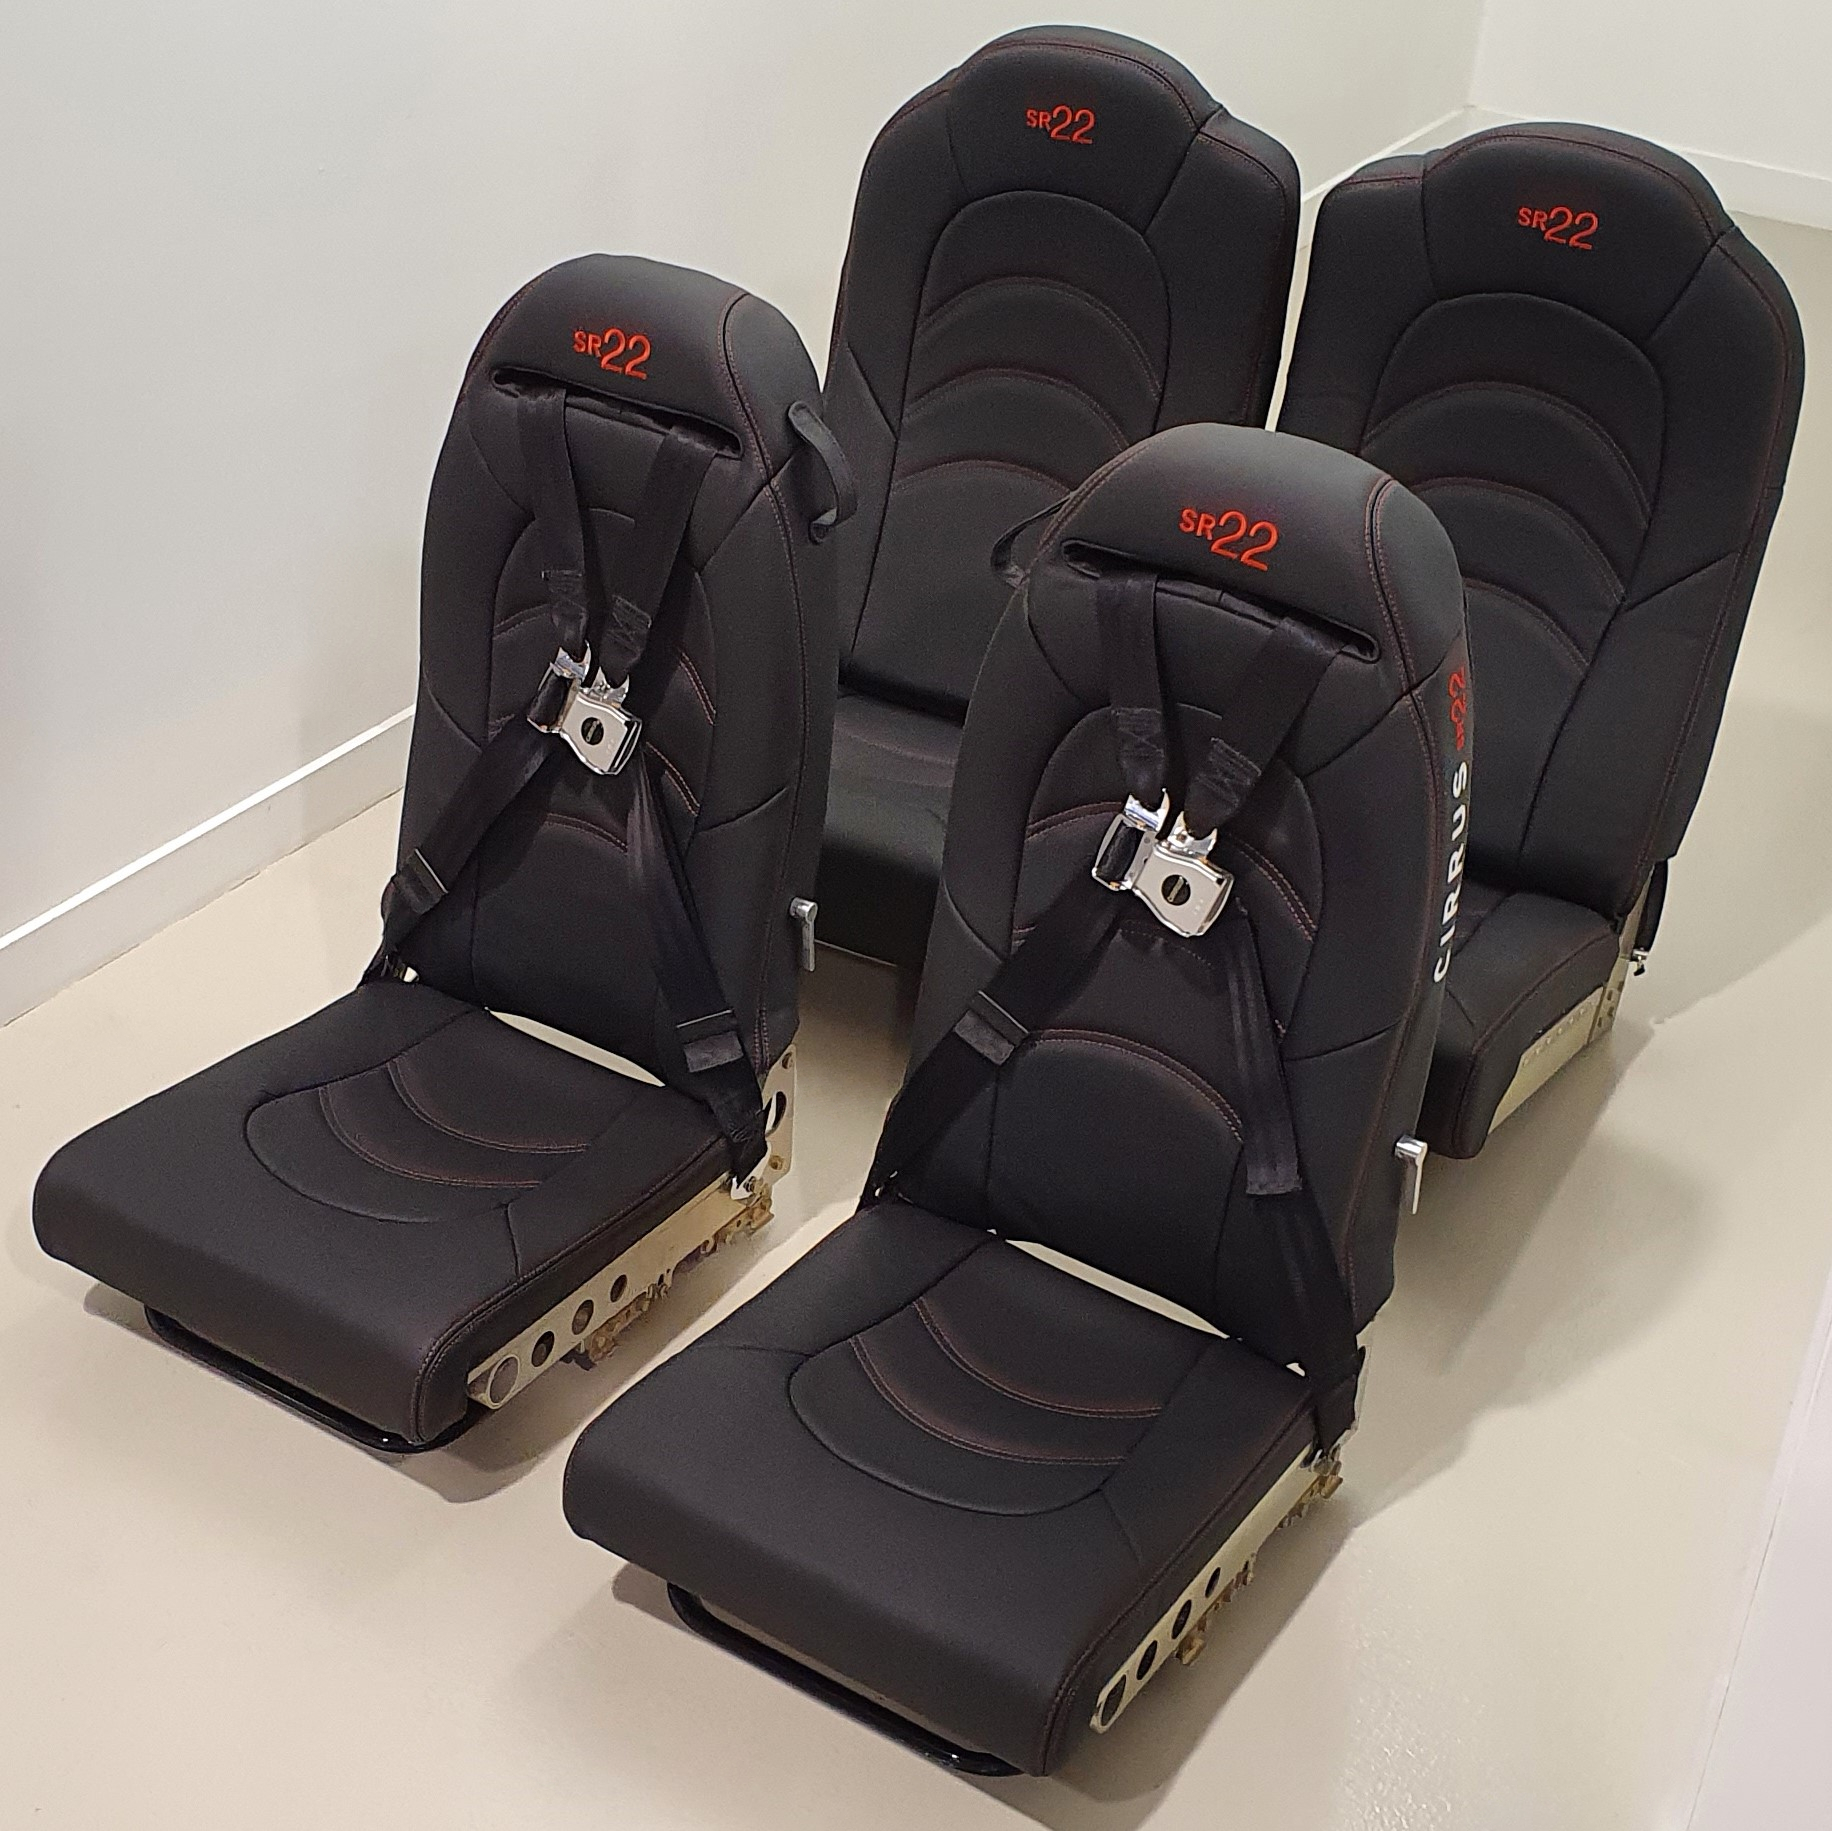 2017 cirrus sr22 interior seats